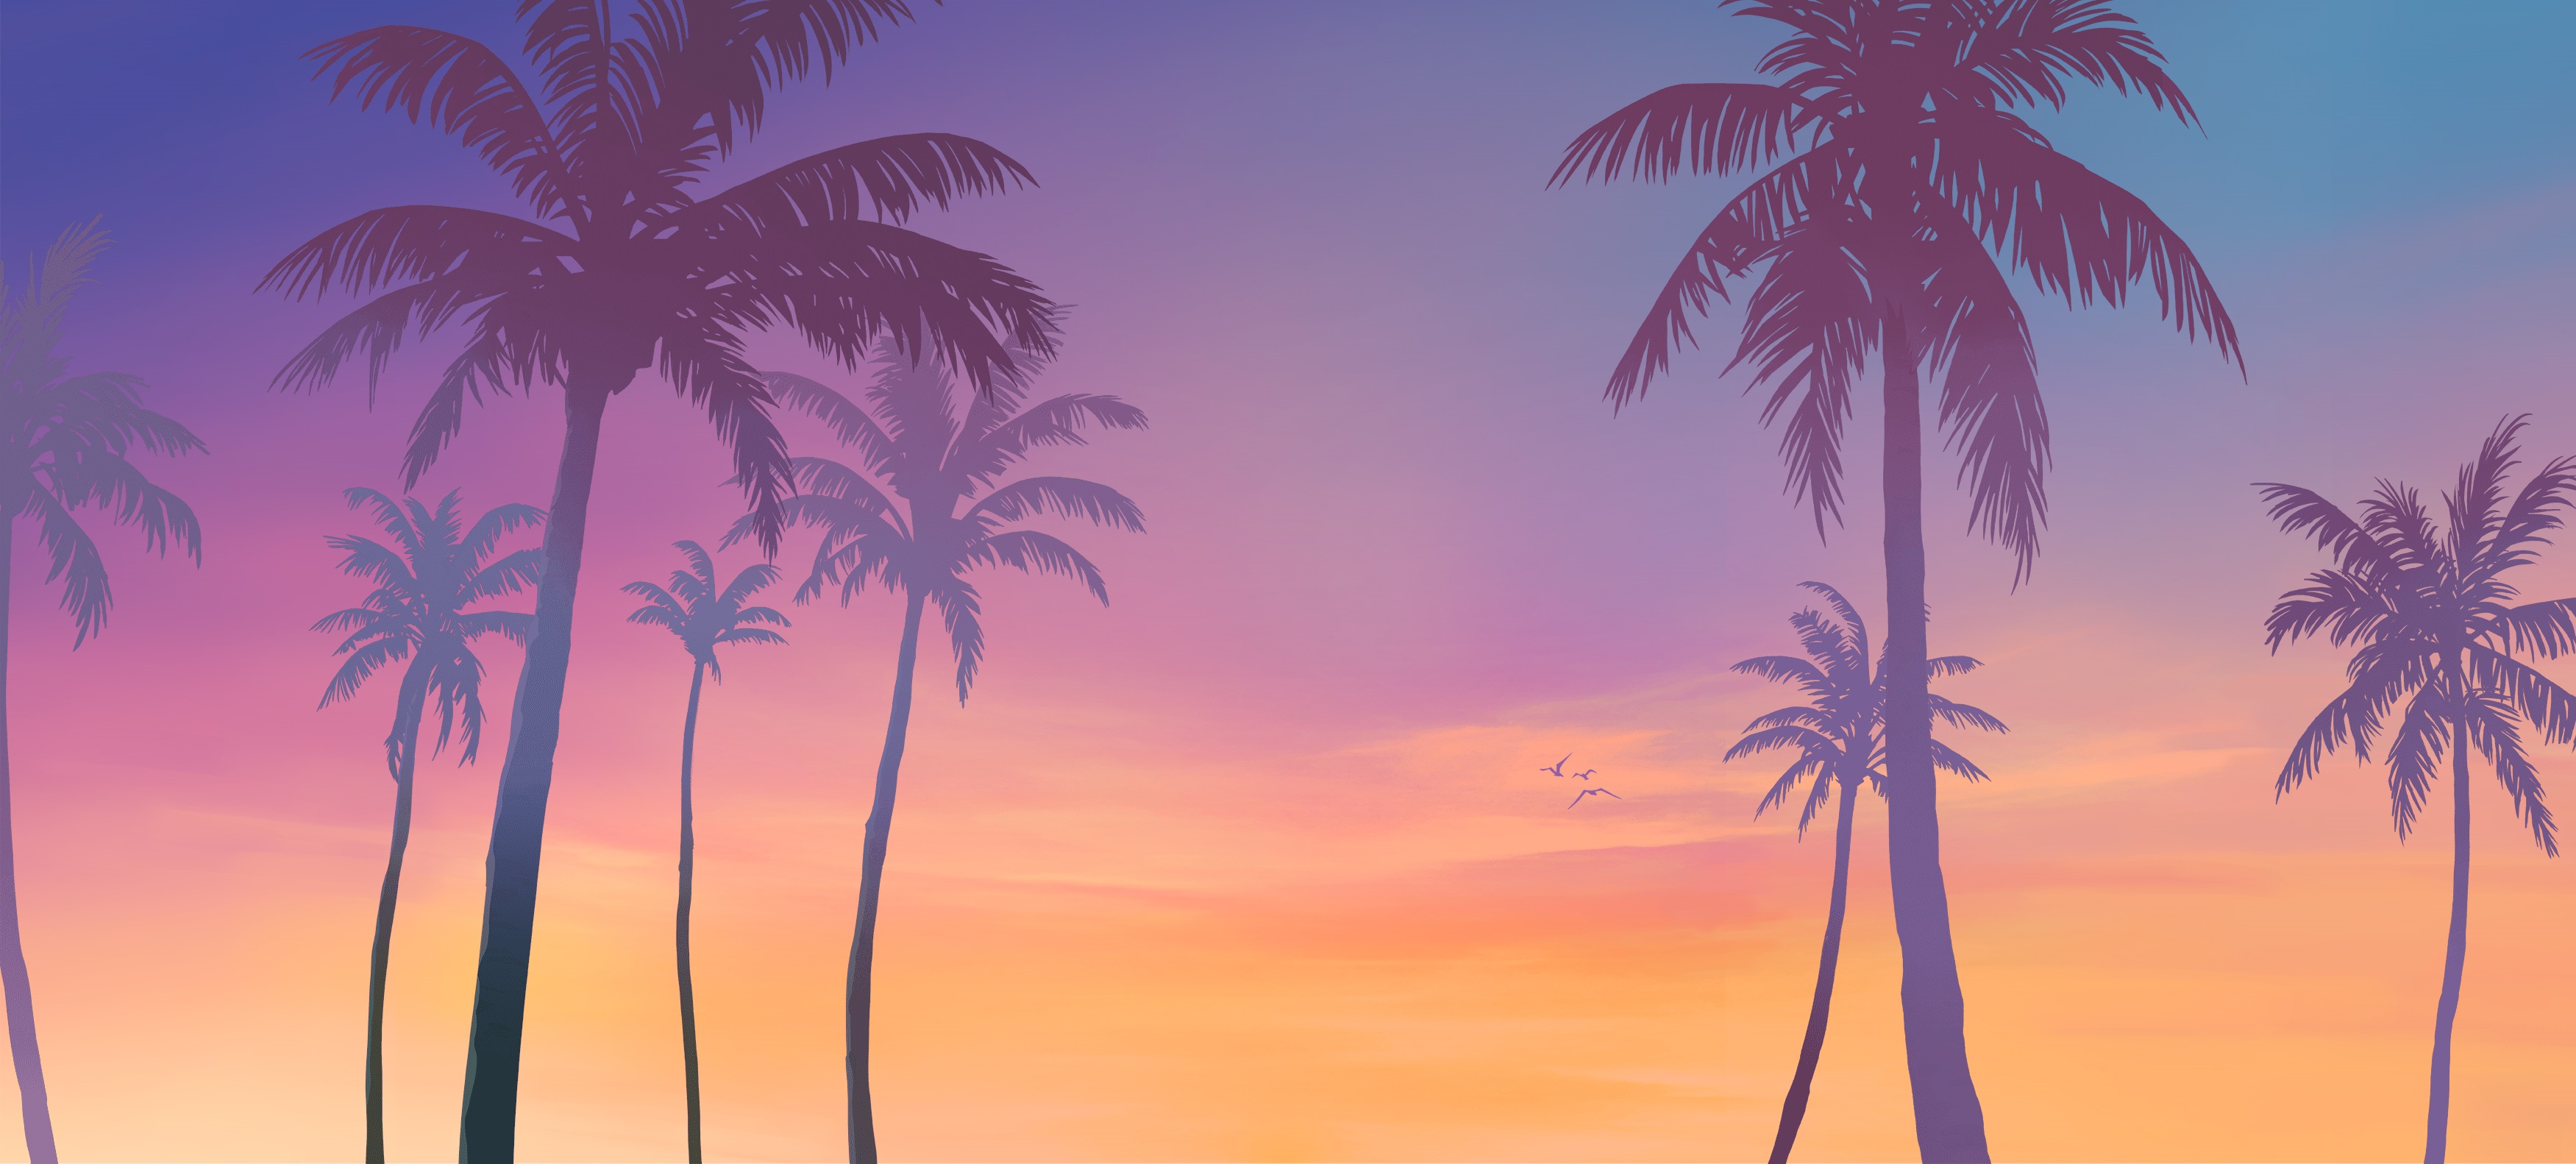 General 3502x1582 Grand Theft Auto Games Workshop minimalism palm trees sunset glow